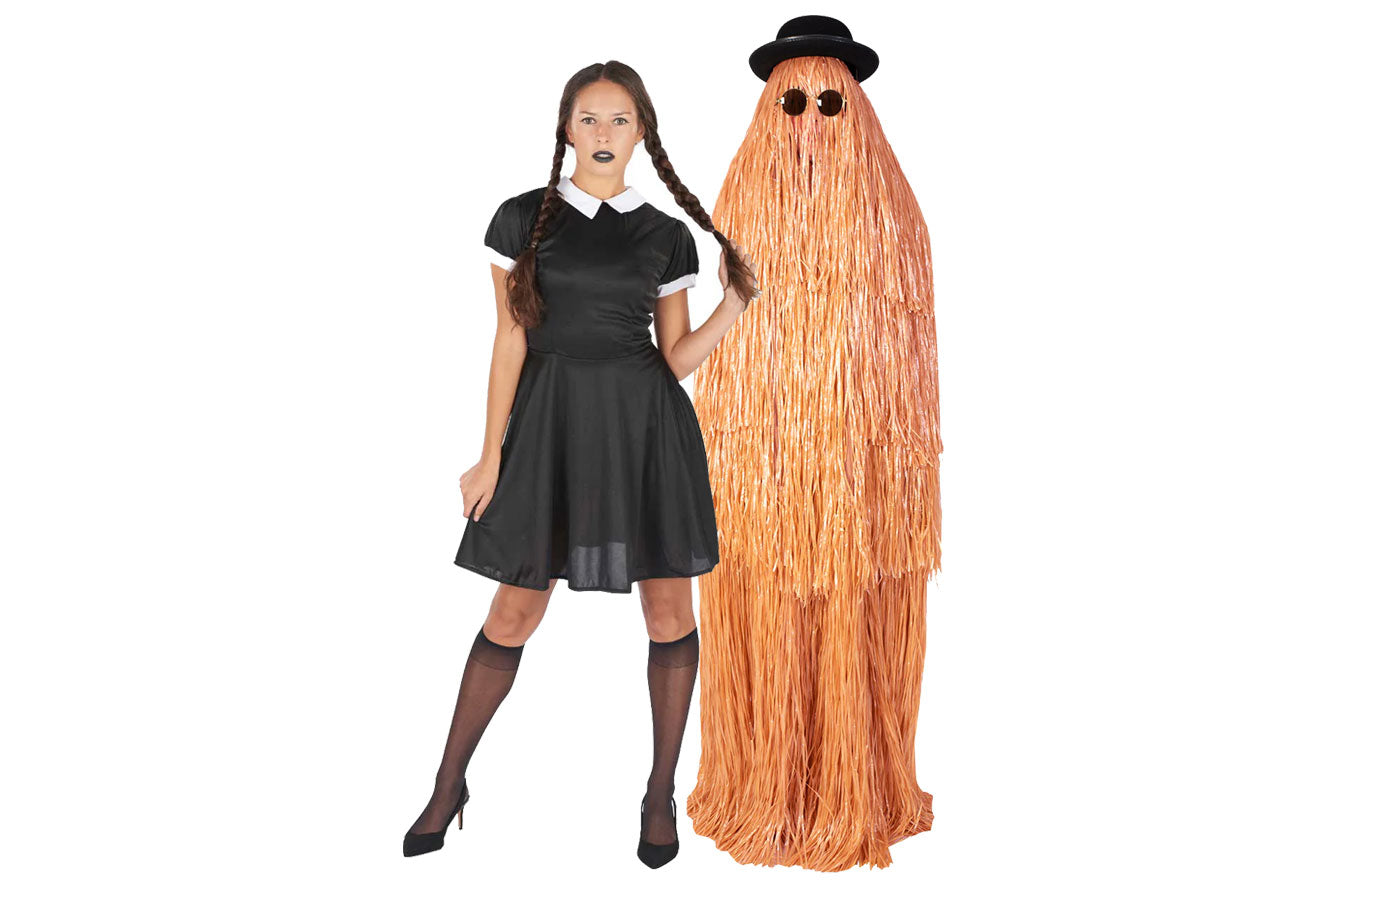 30 Creative Couples Halloween Costume Ideas